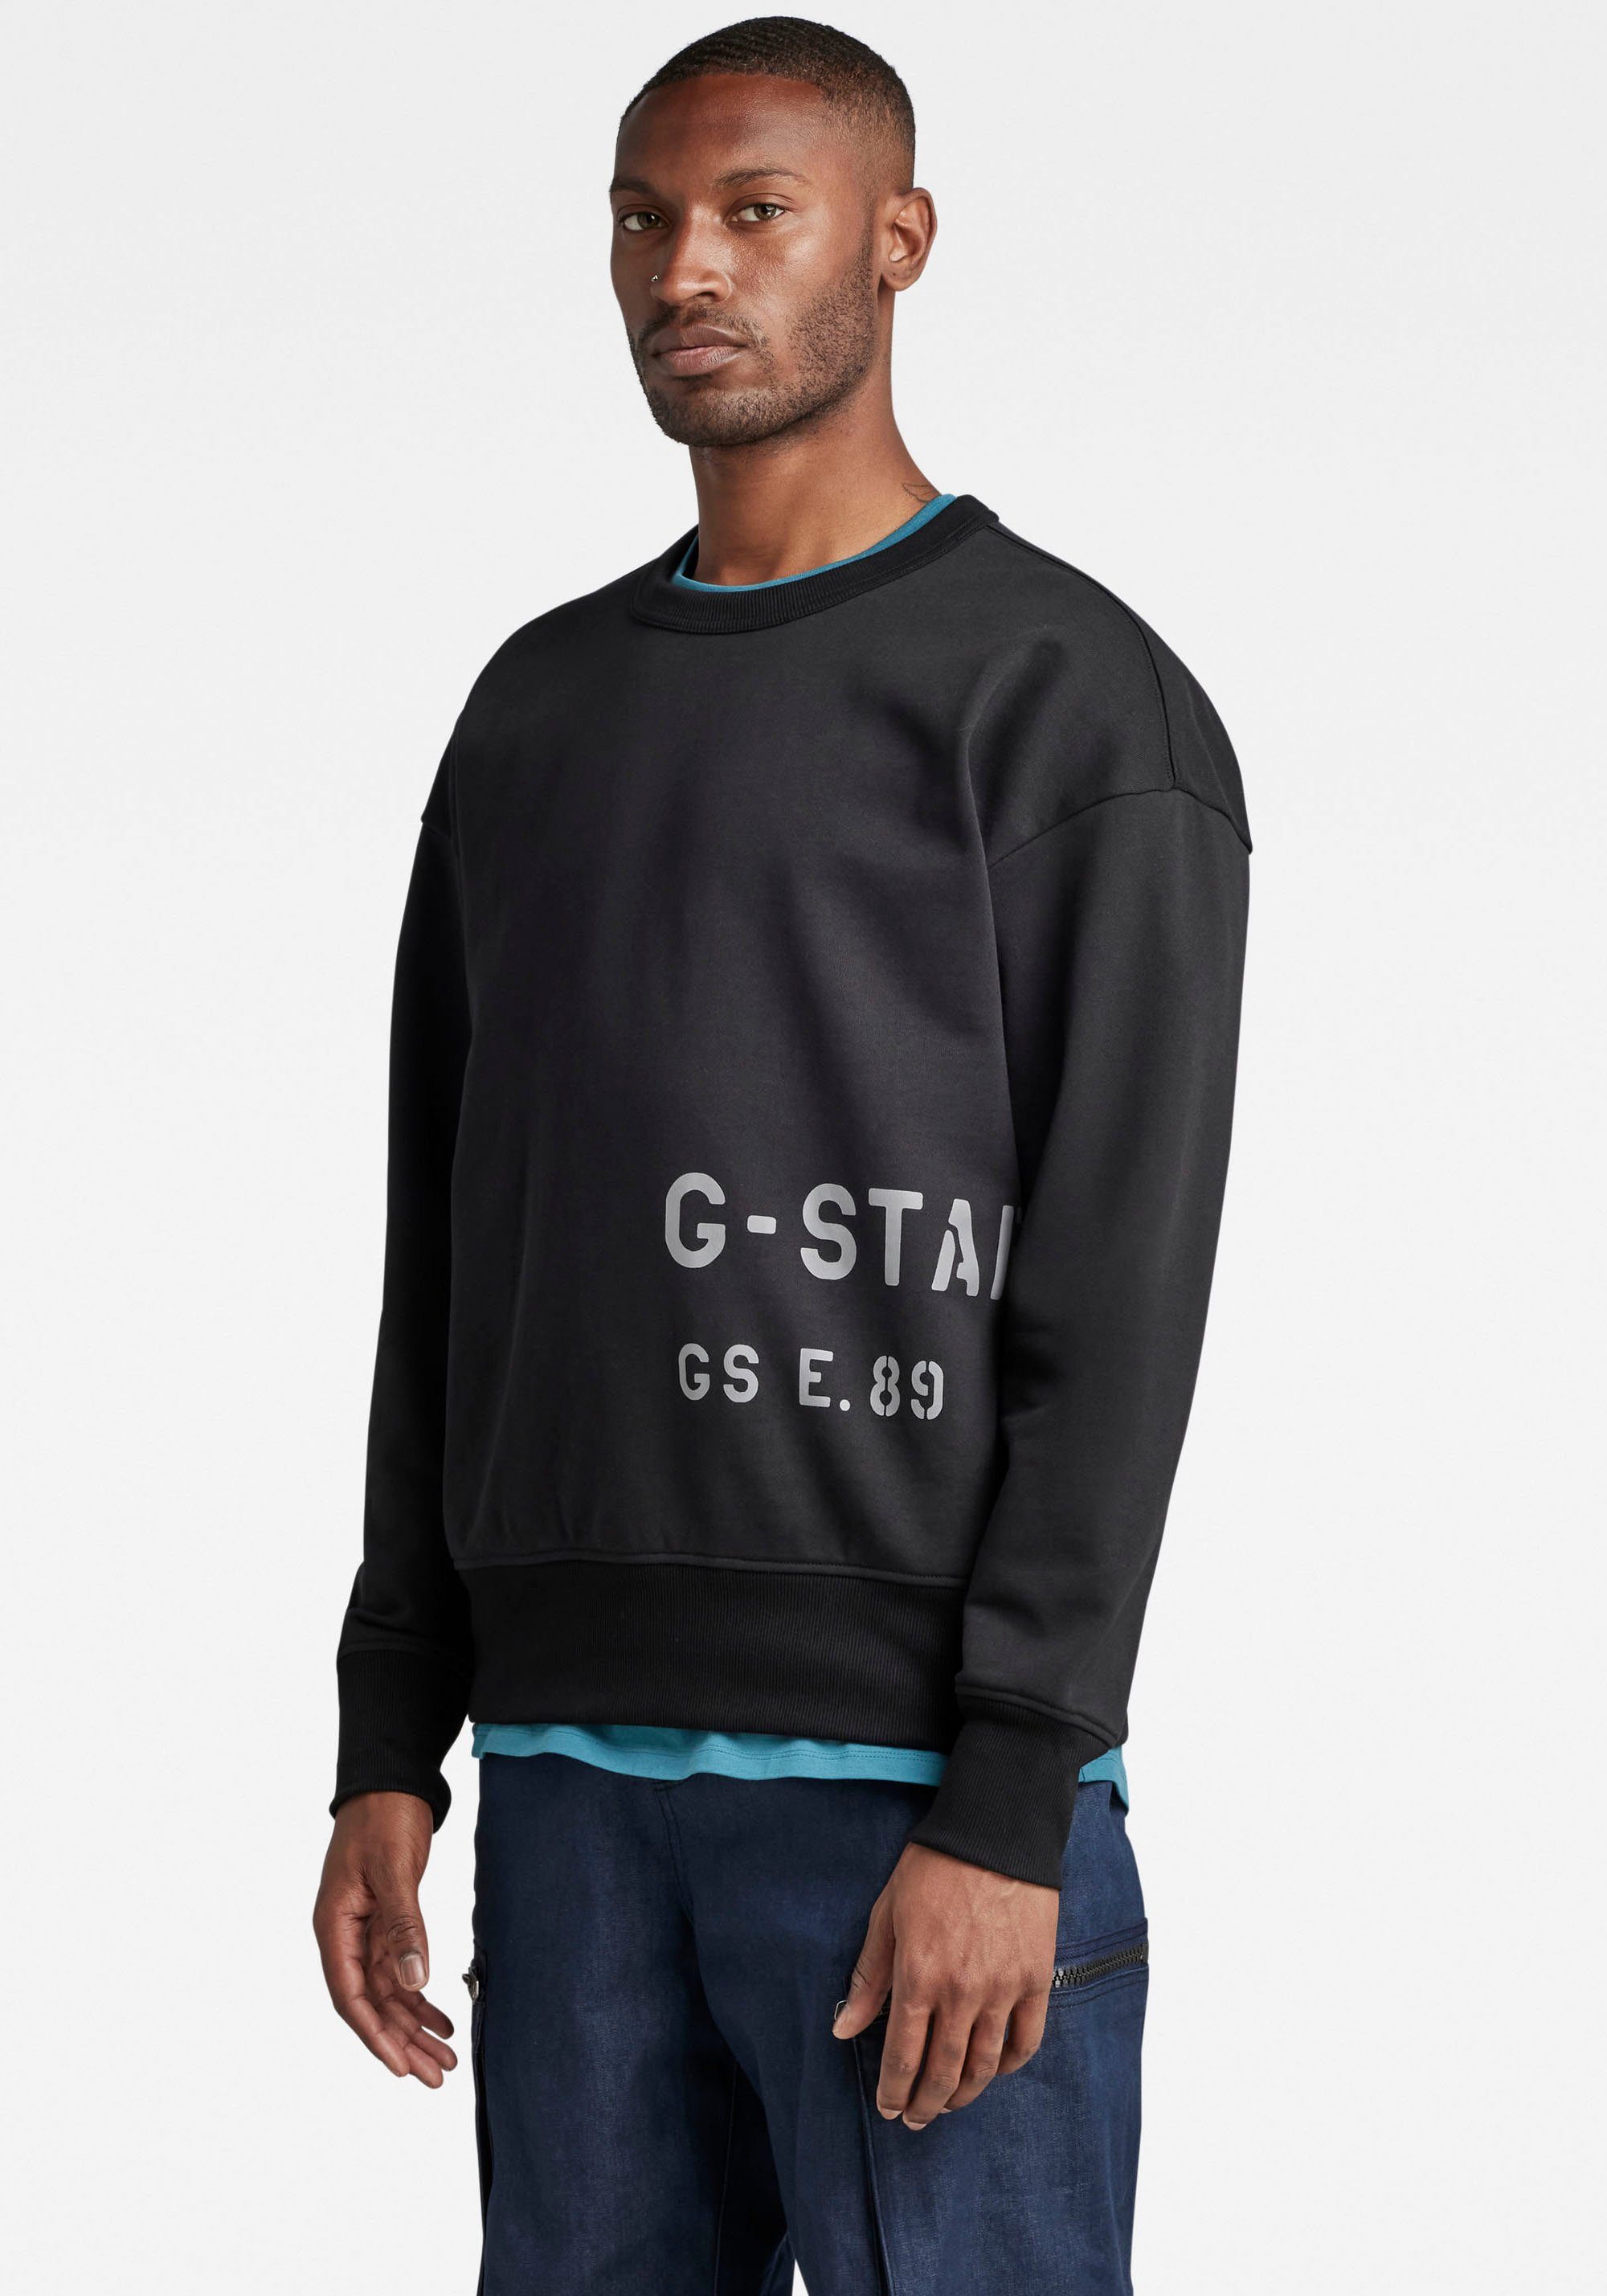 G-Star Sweatshirt Multigraphic oversize RAW Sweatshirt